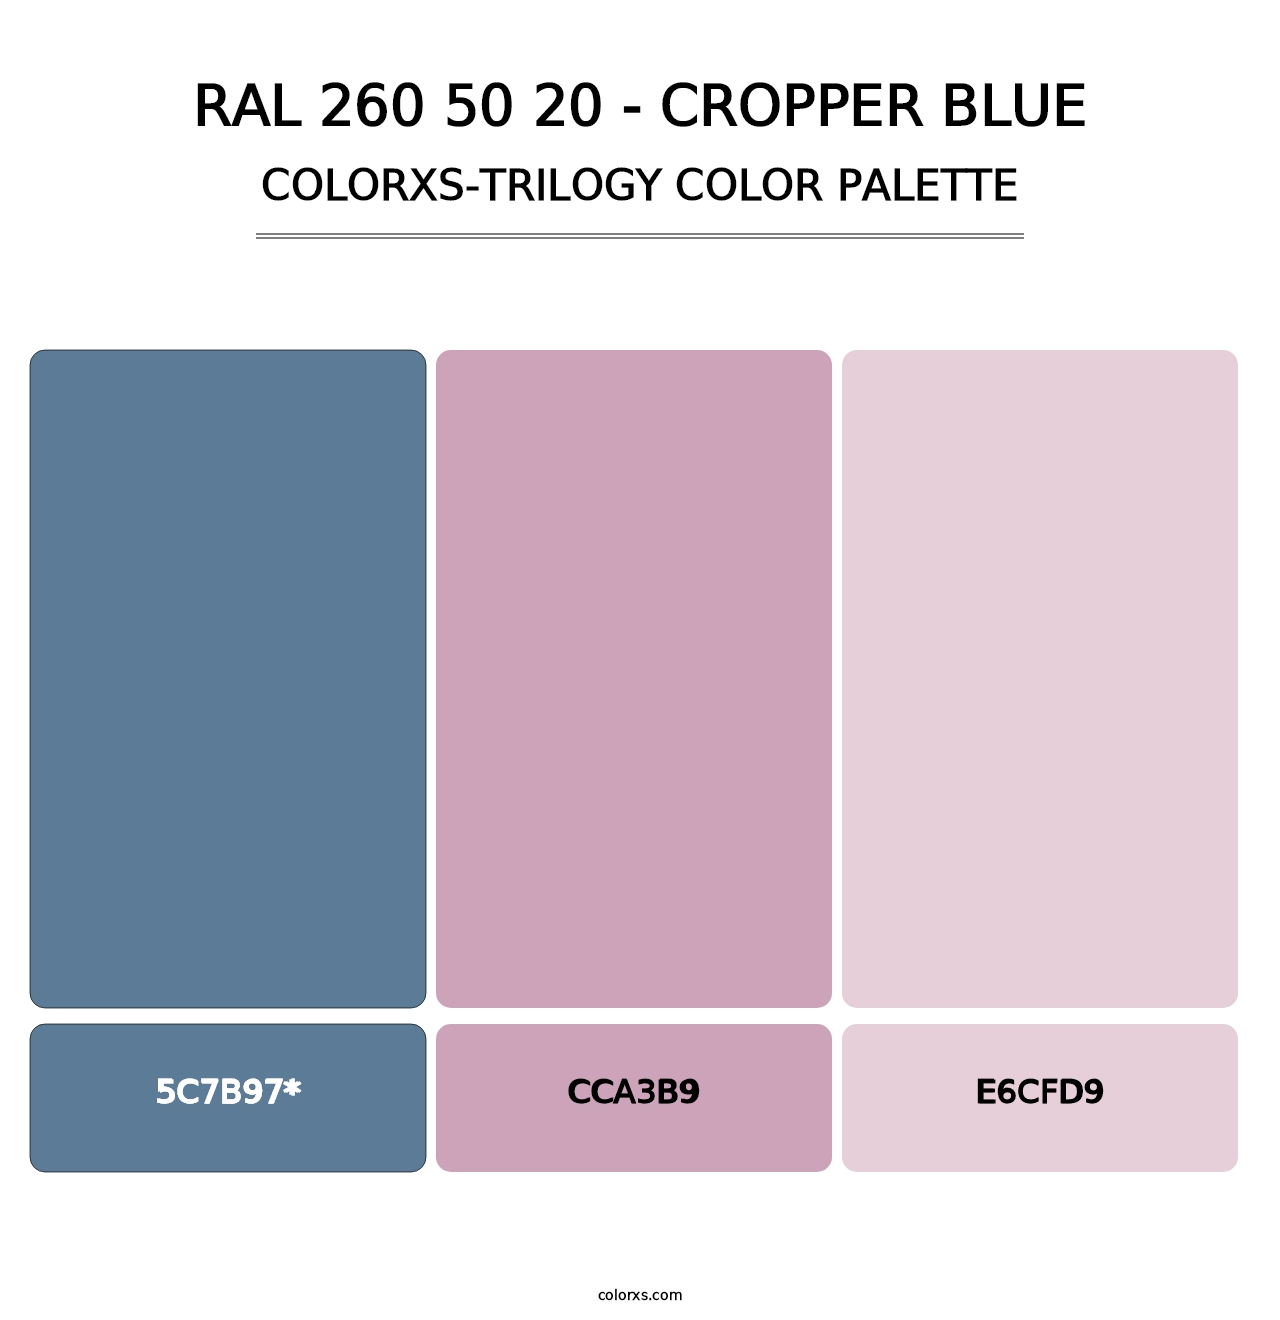 RAL 260 50 20 - Cropper Blue - Colorxs Trilogy Palette